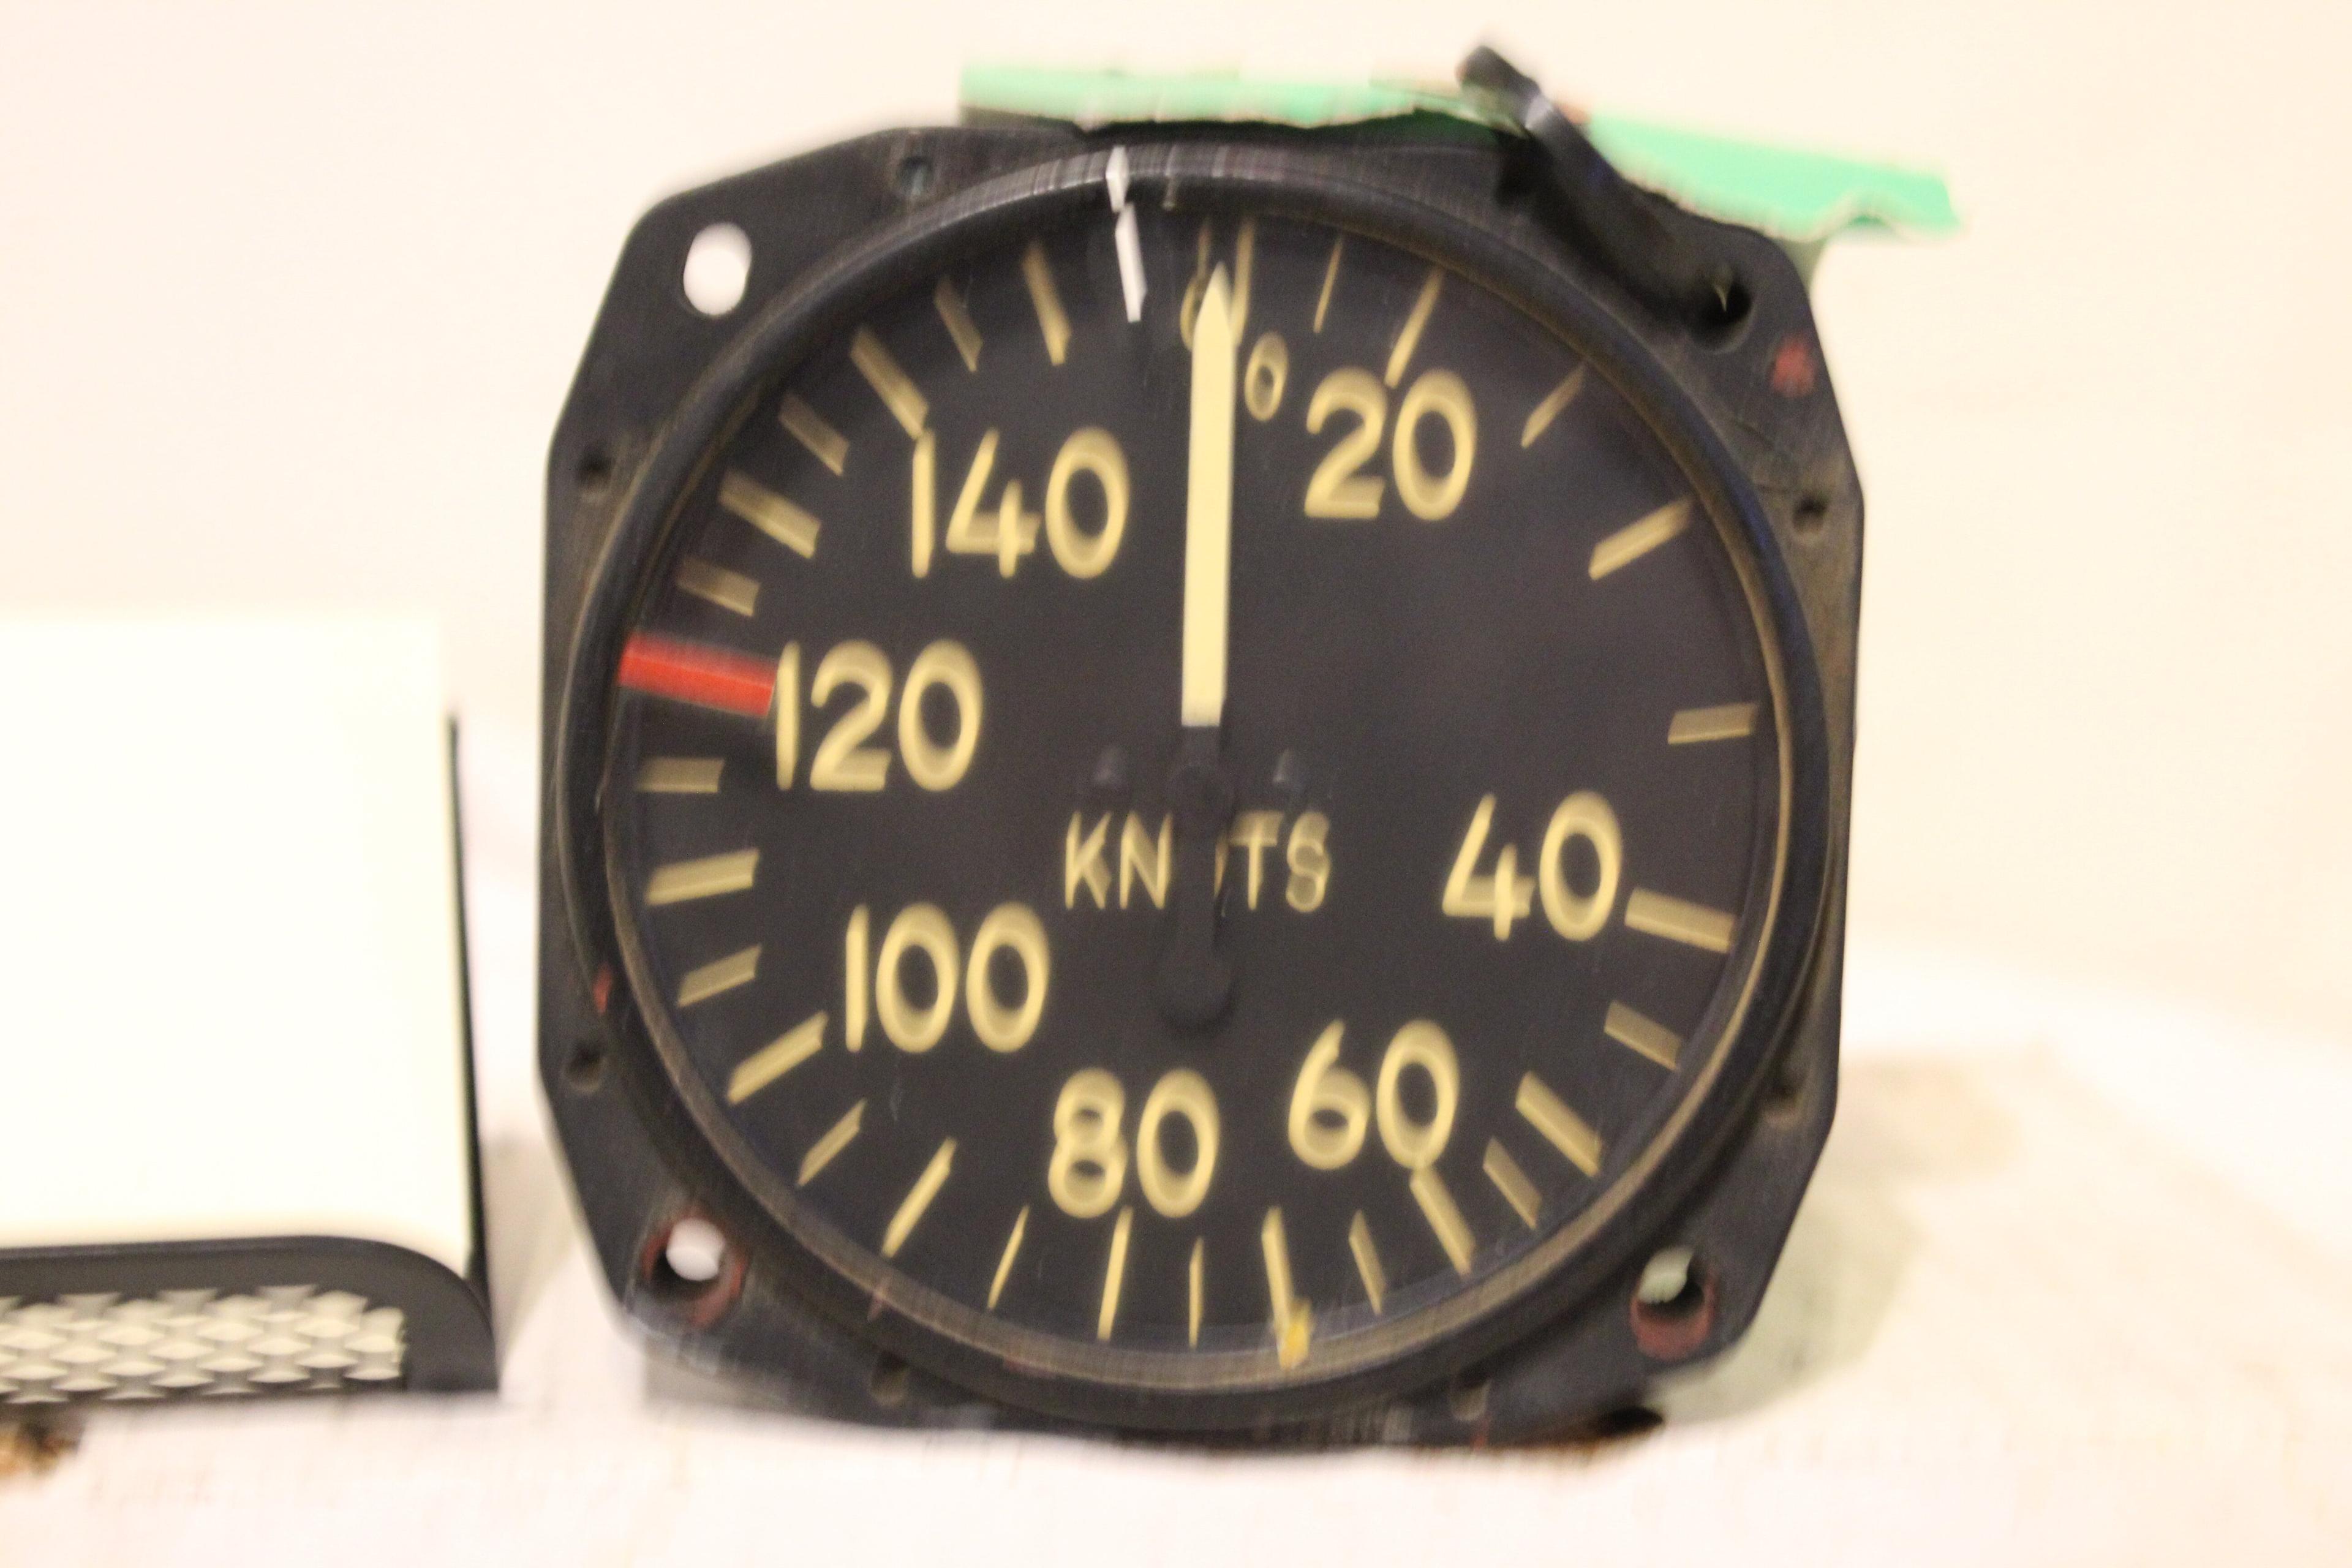 Aerosonic Airspeed Indicator 10-15- Knots Type Ms28045t1 Pn S-15-ka